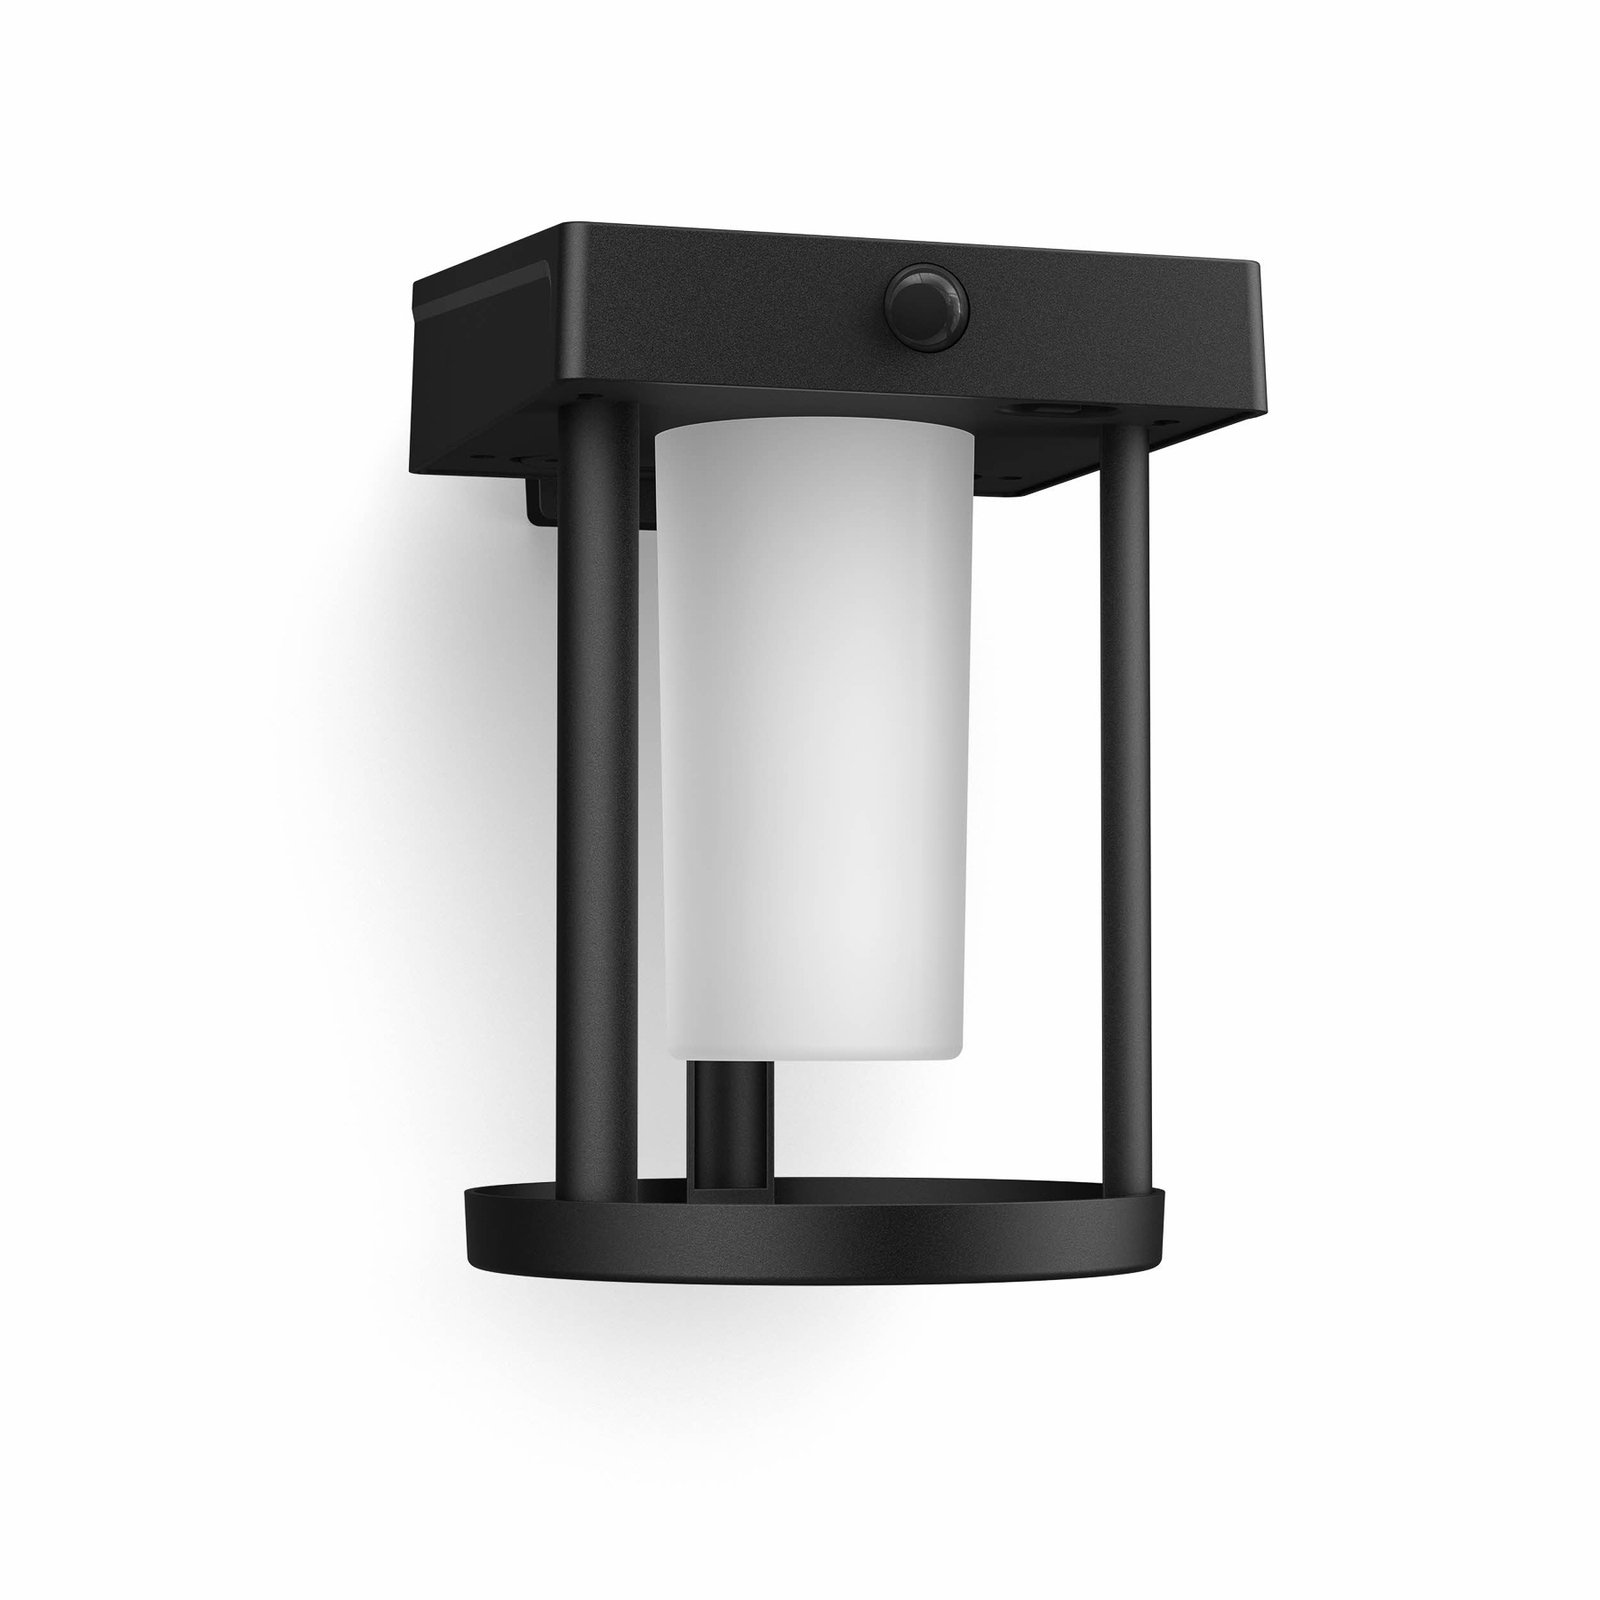 Philips LED wandlamp Camille, zwart/wit, Ø 14 cm